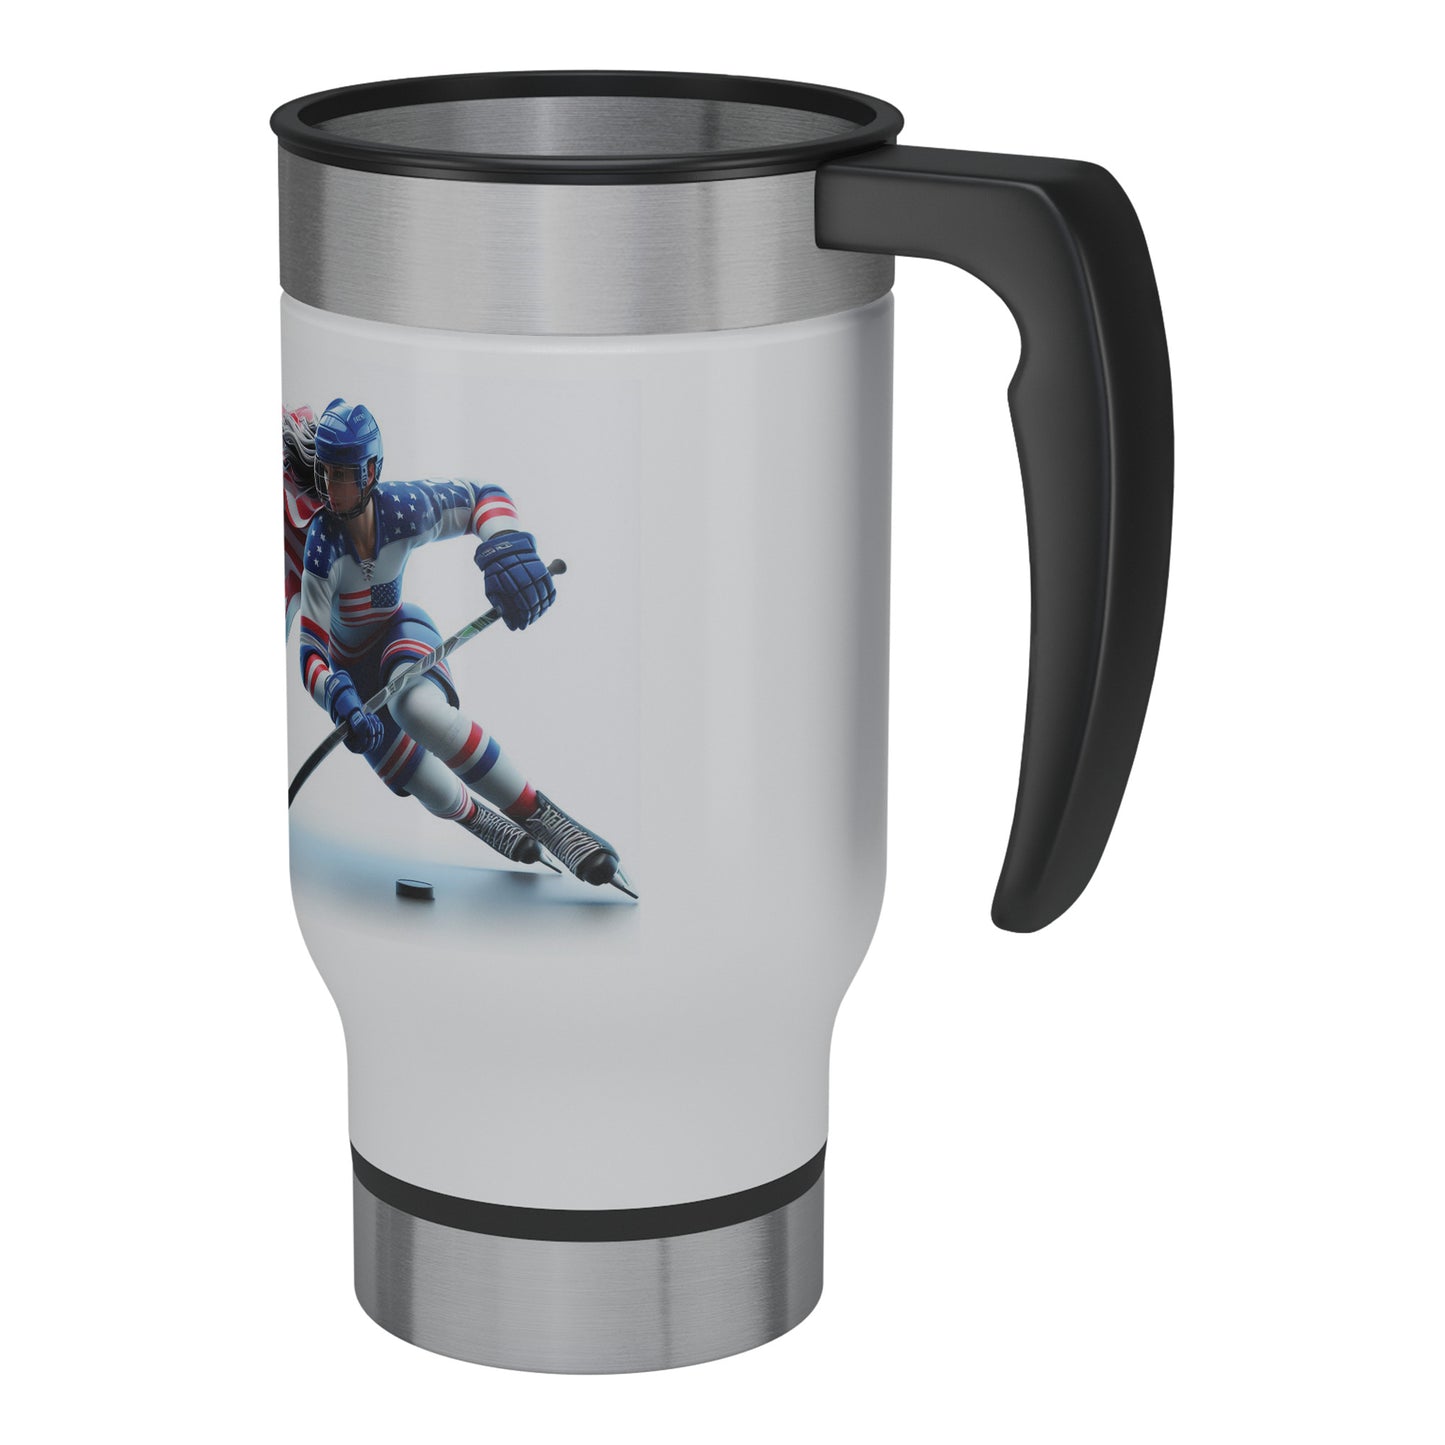 Women Ice Hockey Players - Travel Mug #14